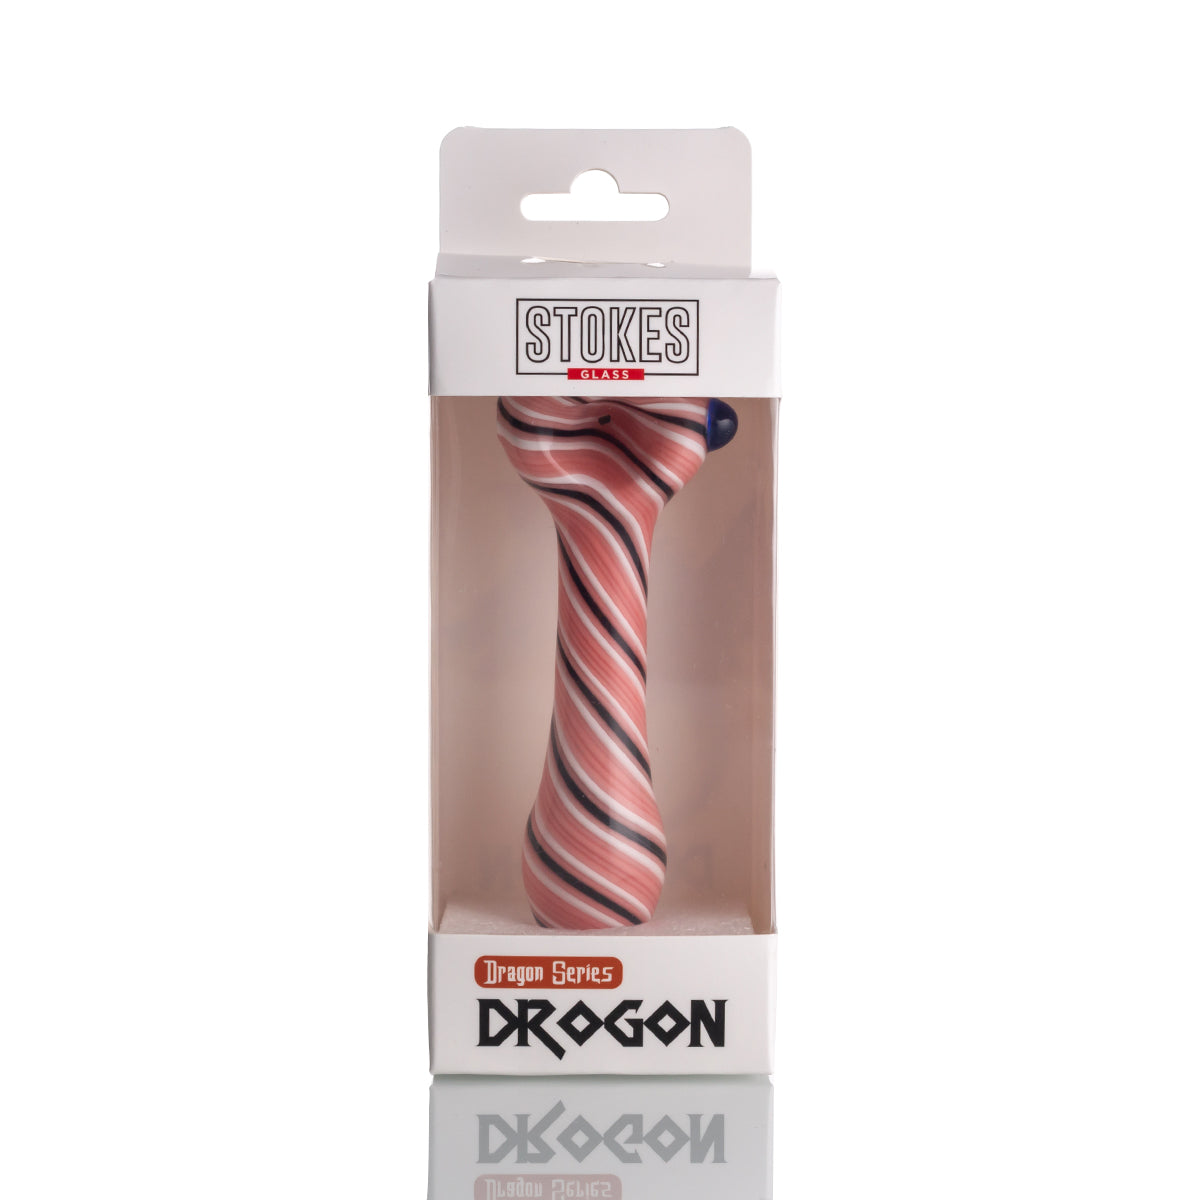 STOKES - Glass Hand Pipe Dragon series - Drogon